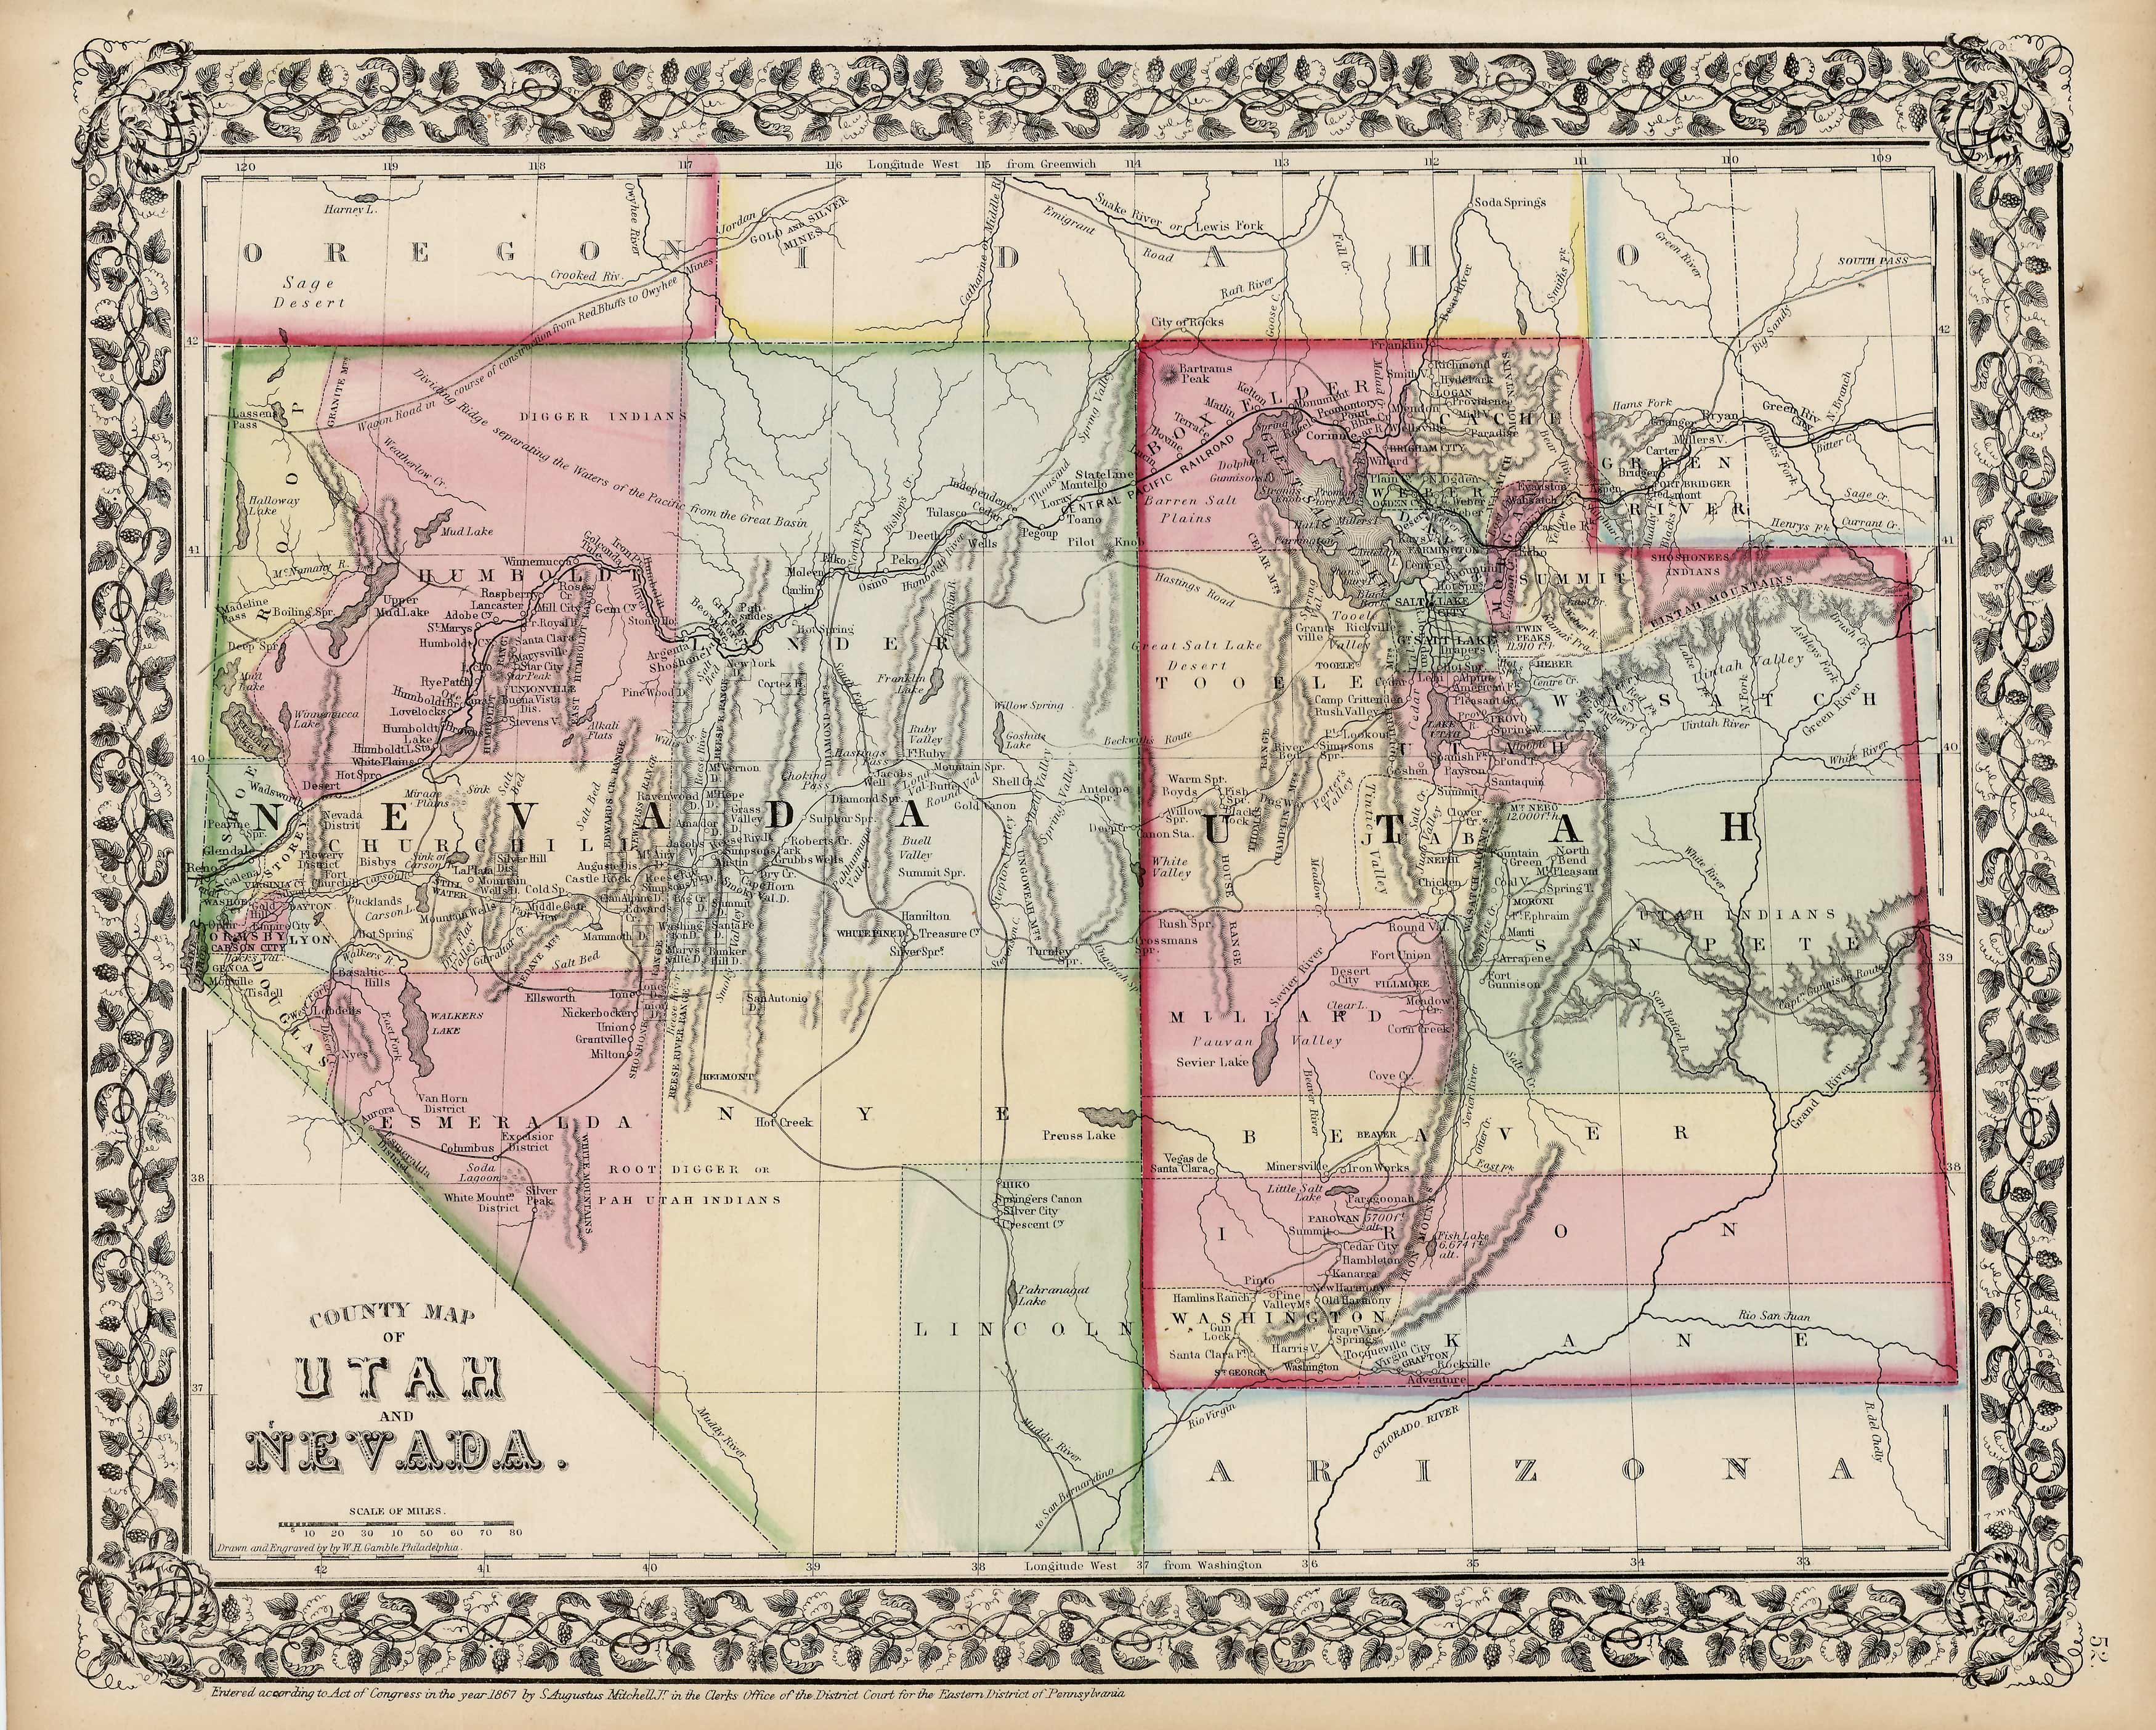 County Map Of Utah And Nevada Art Source International 0079